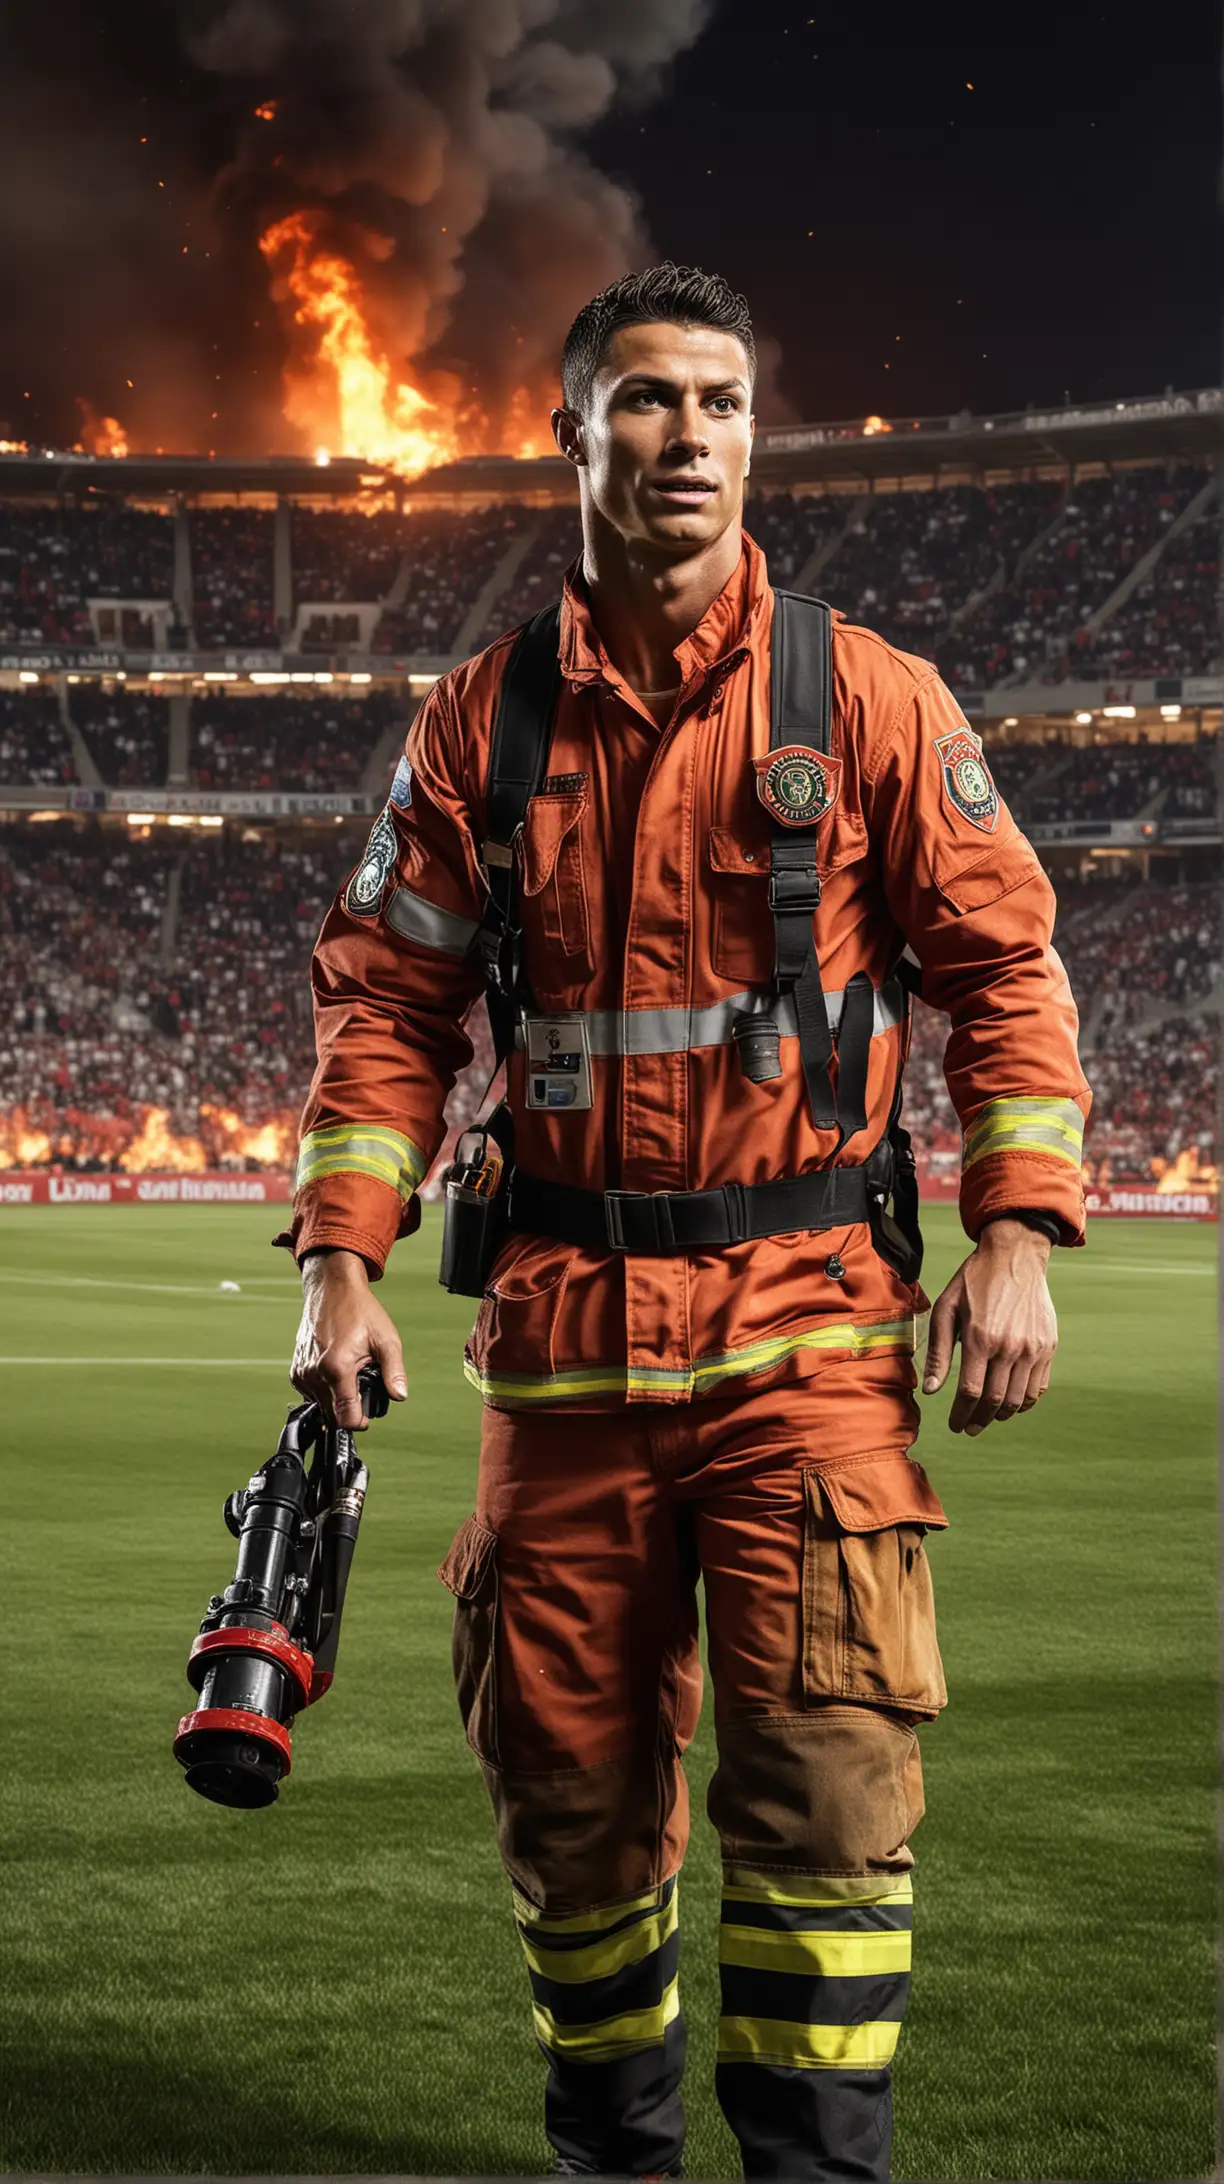 Cristiano Ronaldo Firefighter Portrait with Stadium Background